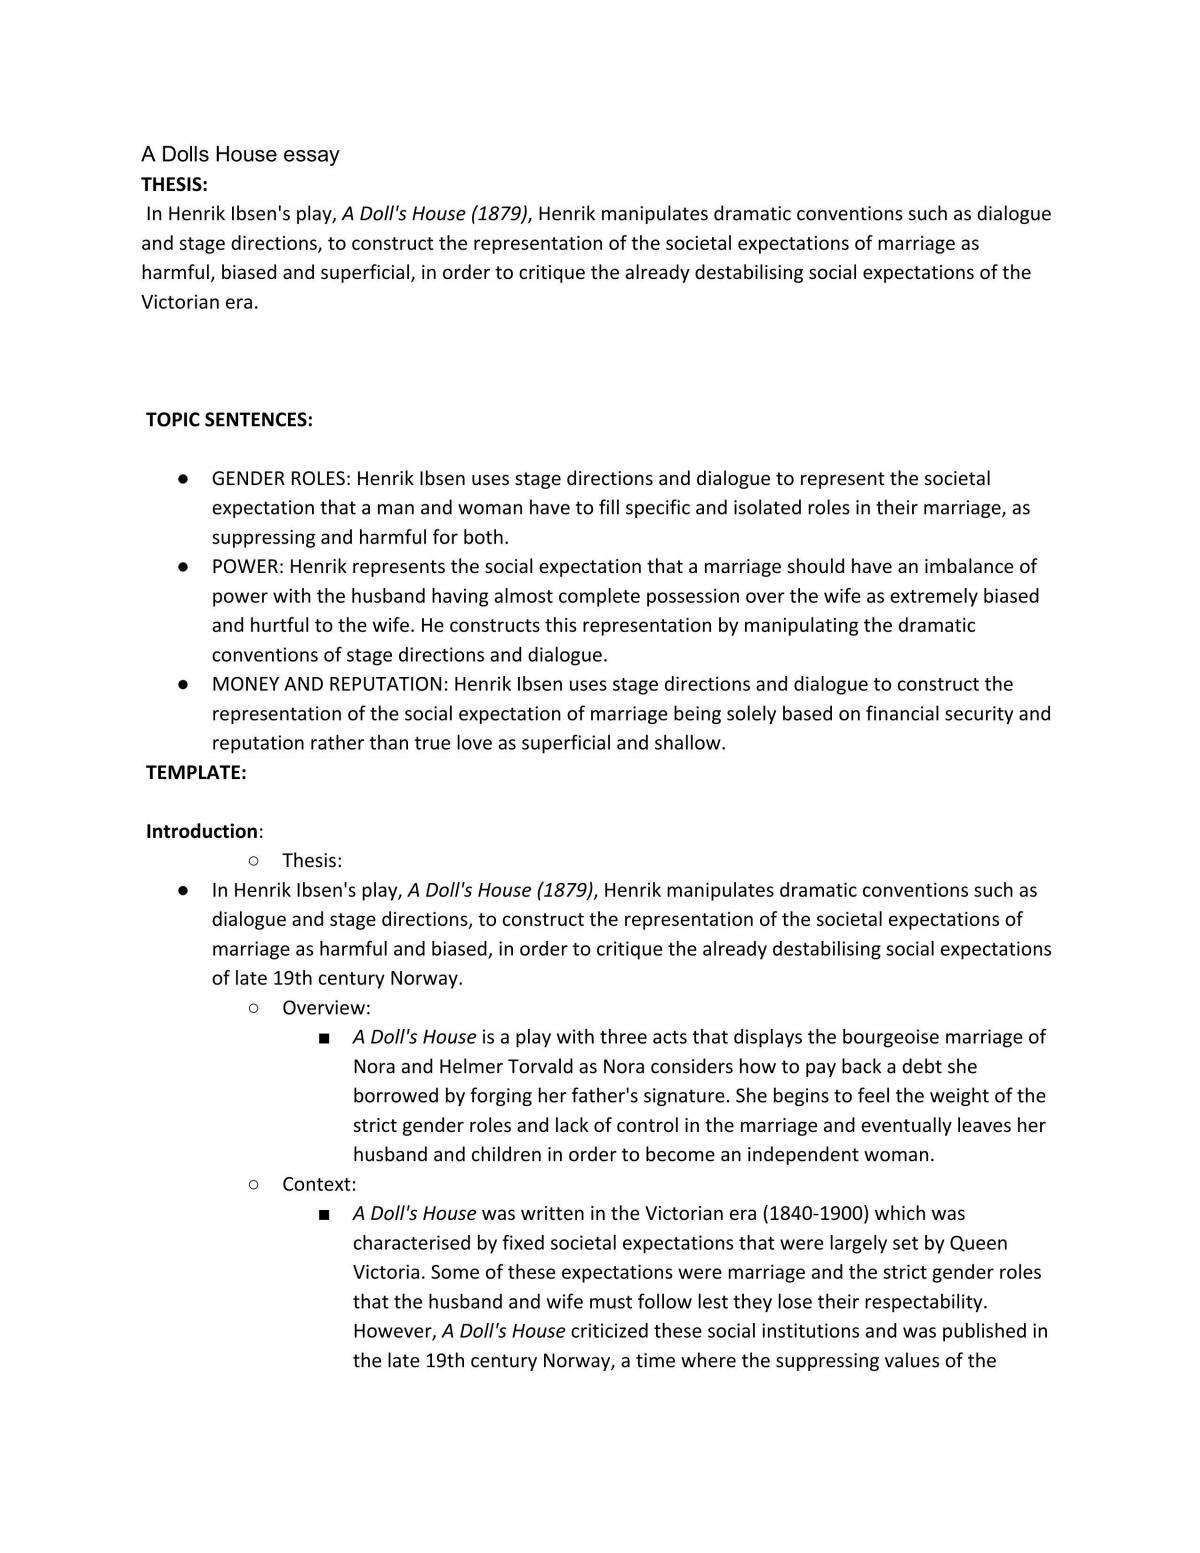 doll's house essay pdf